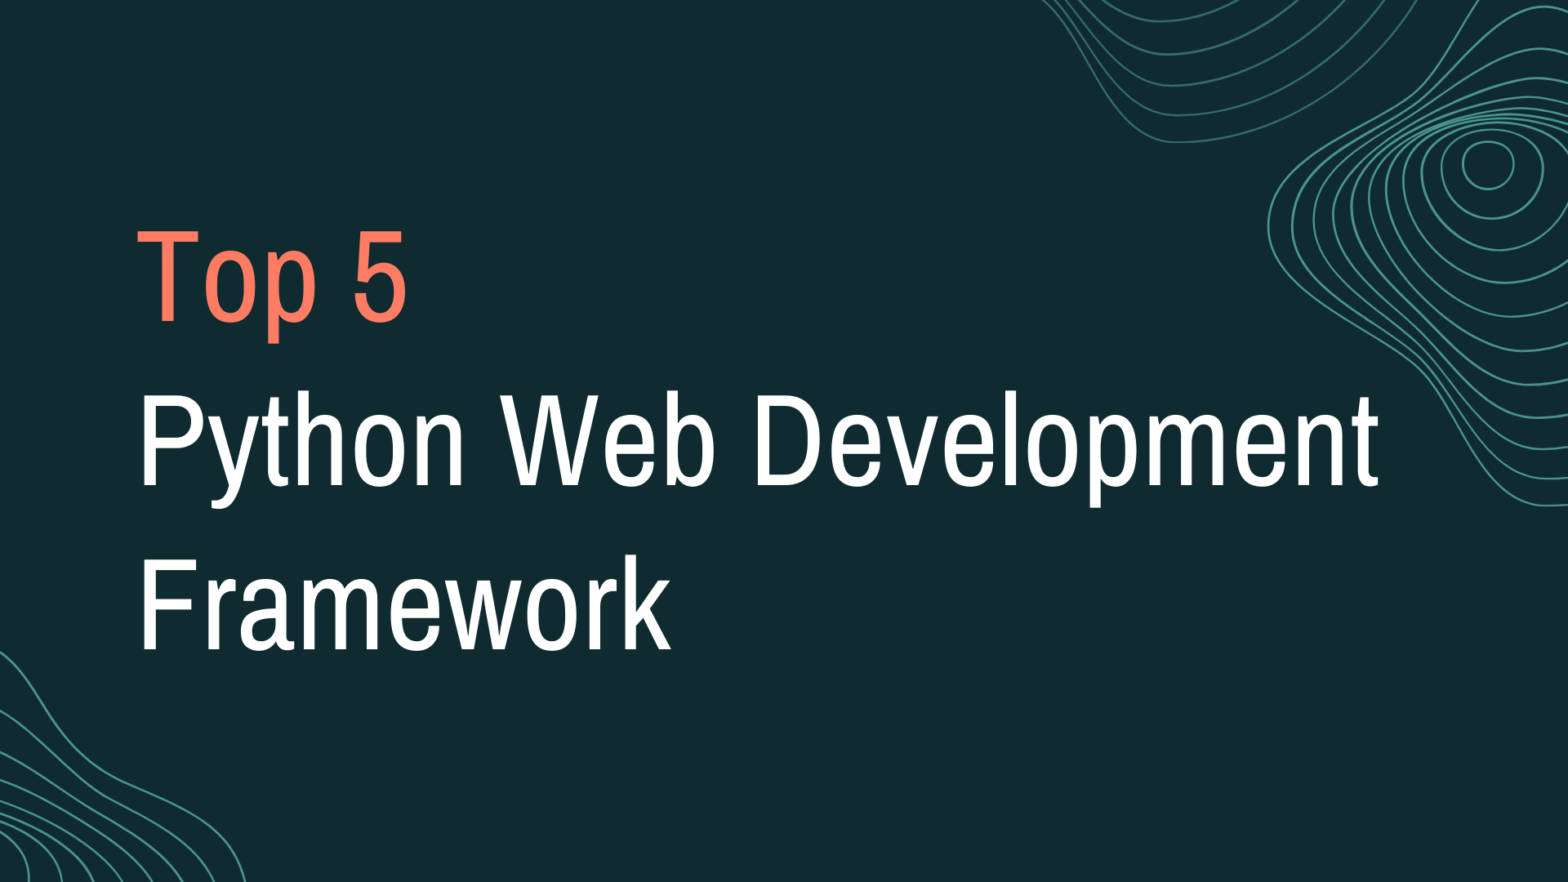 Top 5 Python Web Development Framework